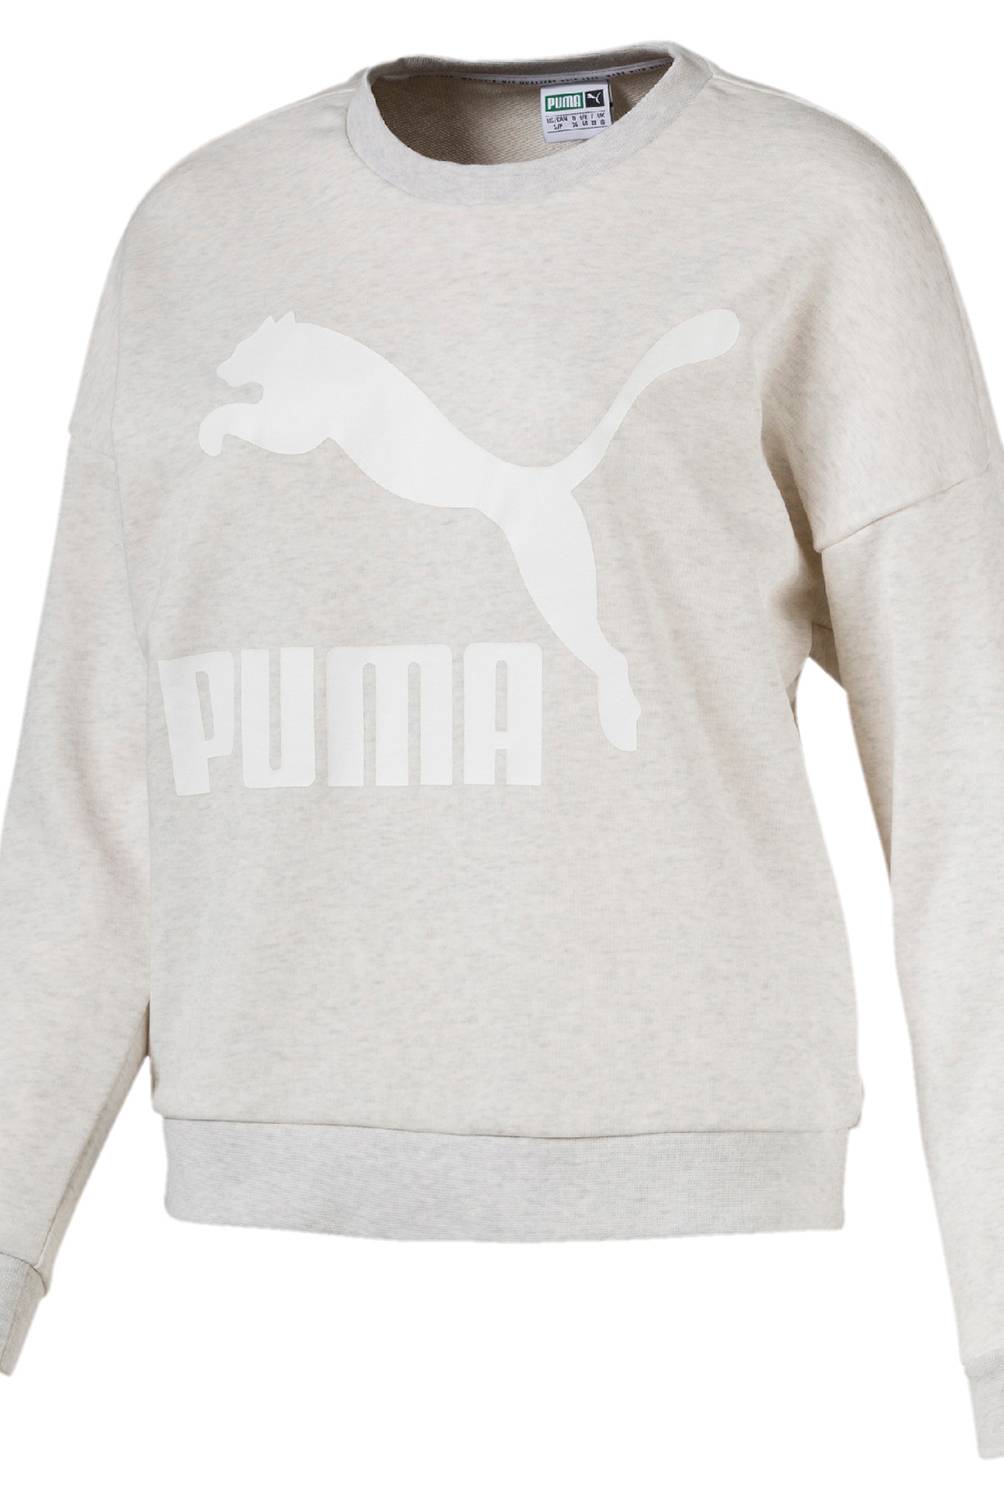 Puma - Polerón Training Mujer 576245 50